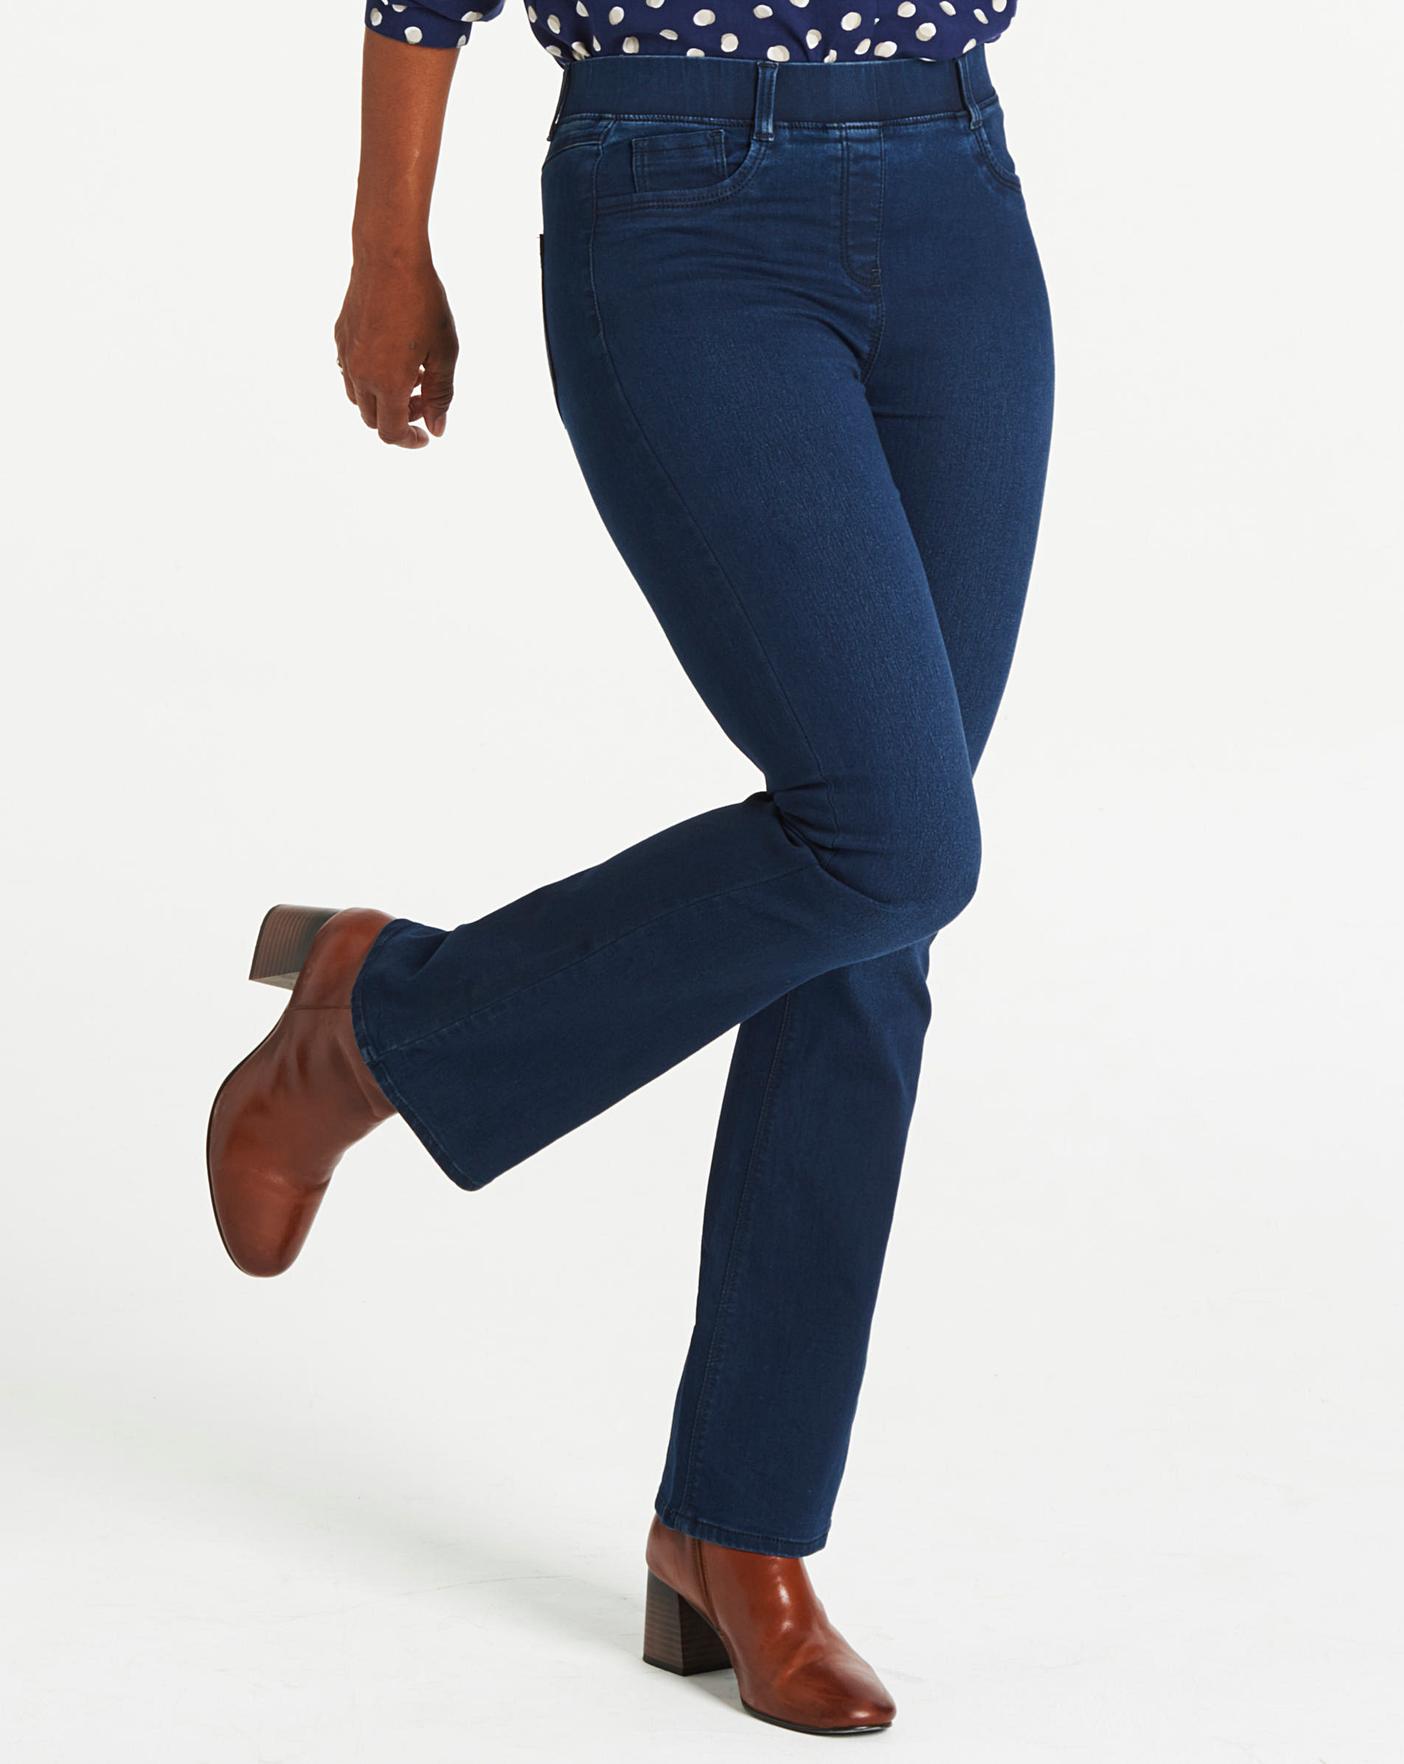 levis jeans size guide